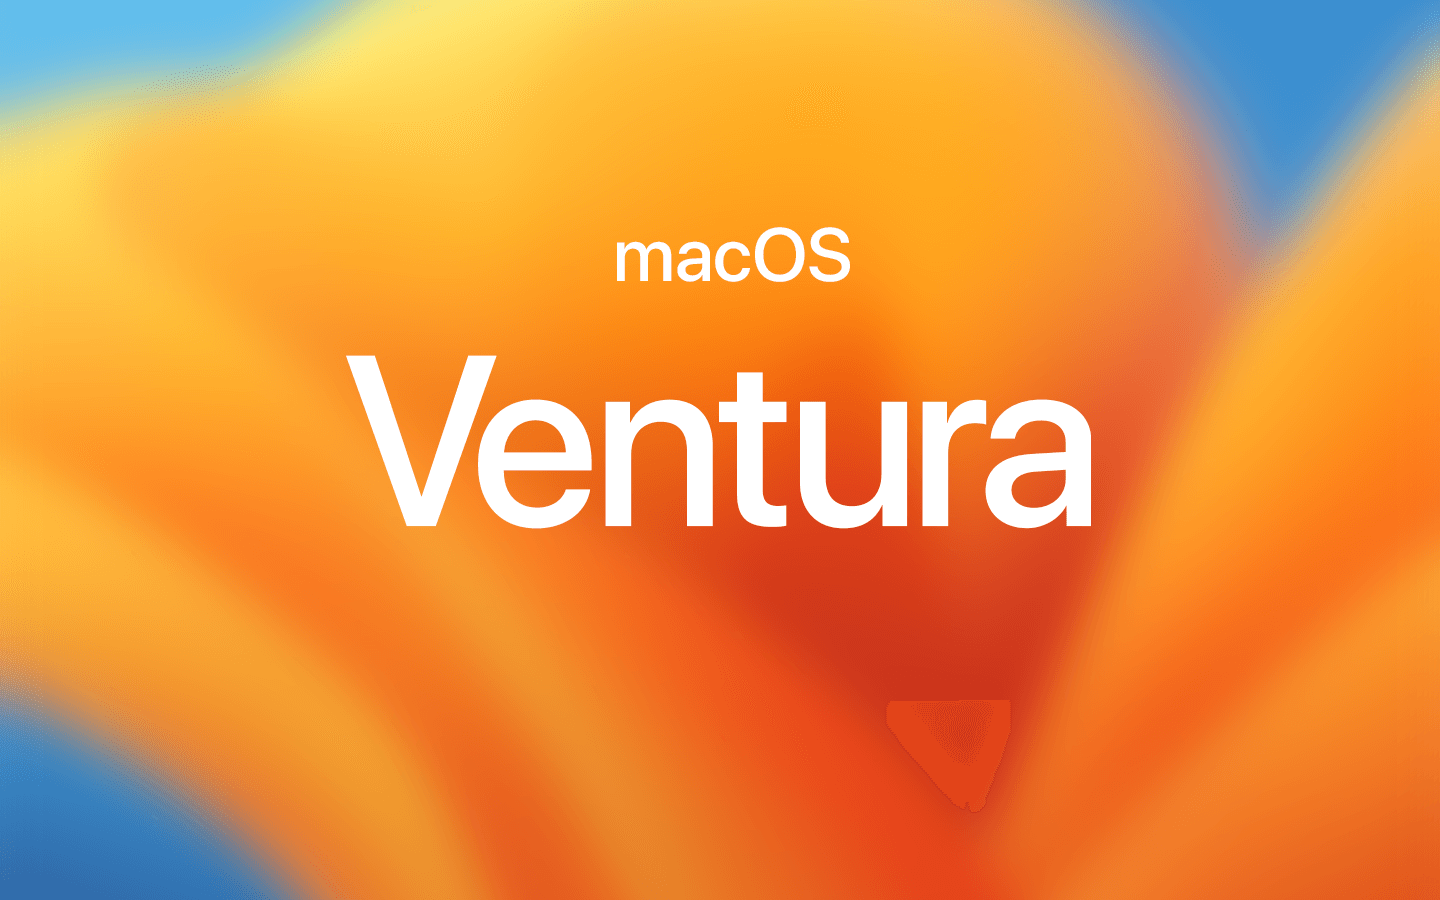 Apple、「macOS Ventura」をリリース、ステージマネージャーや連携カメラなど追加